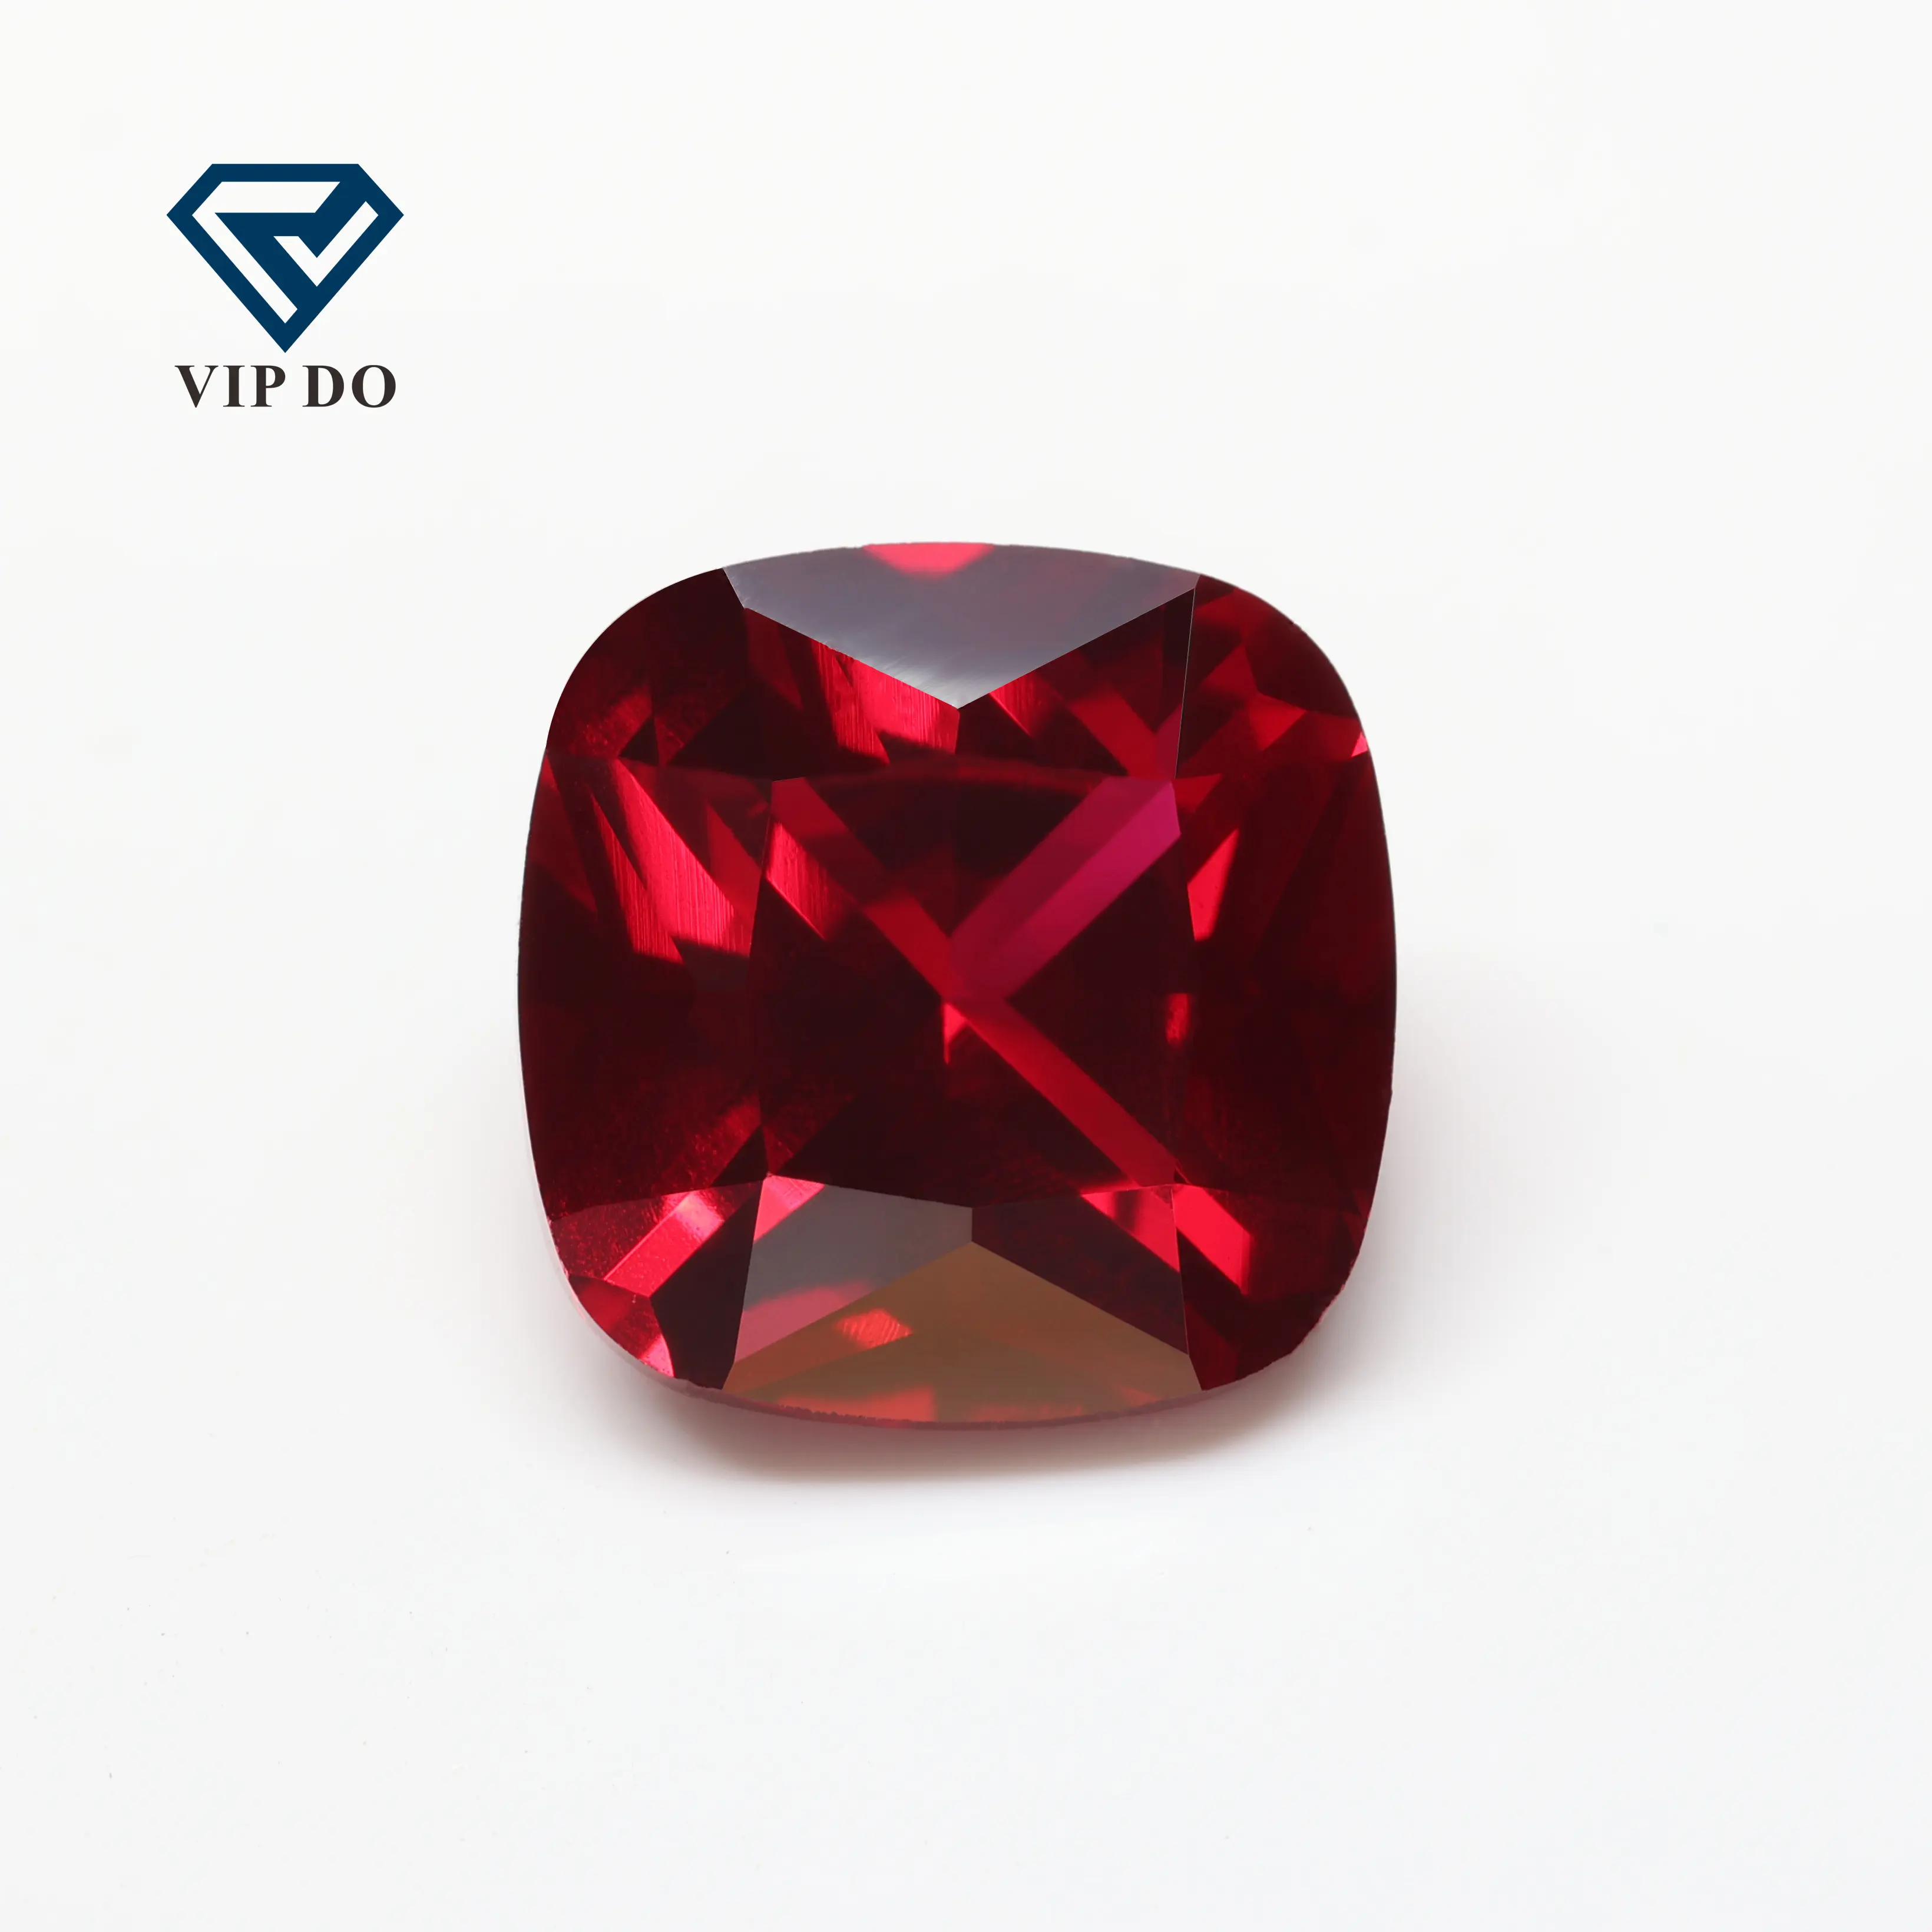 Manufacturers synthetic corundum gemstones Cushion cut 4*4mm-8*8 mm 8# dark red loose corundum stone ruby for jewelry making